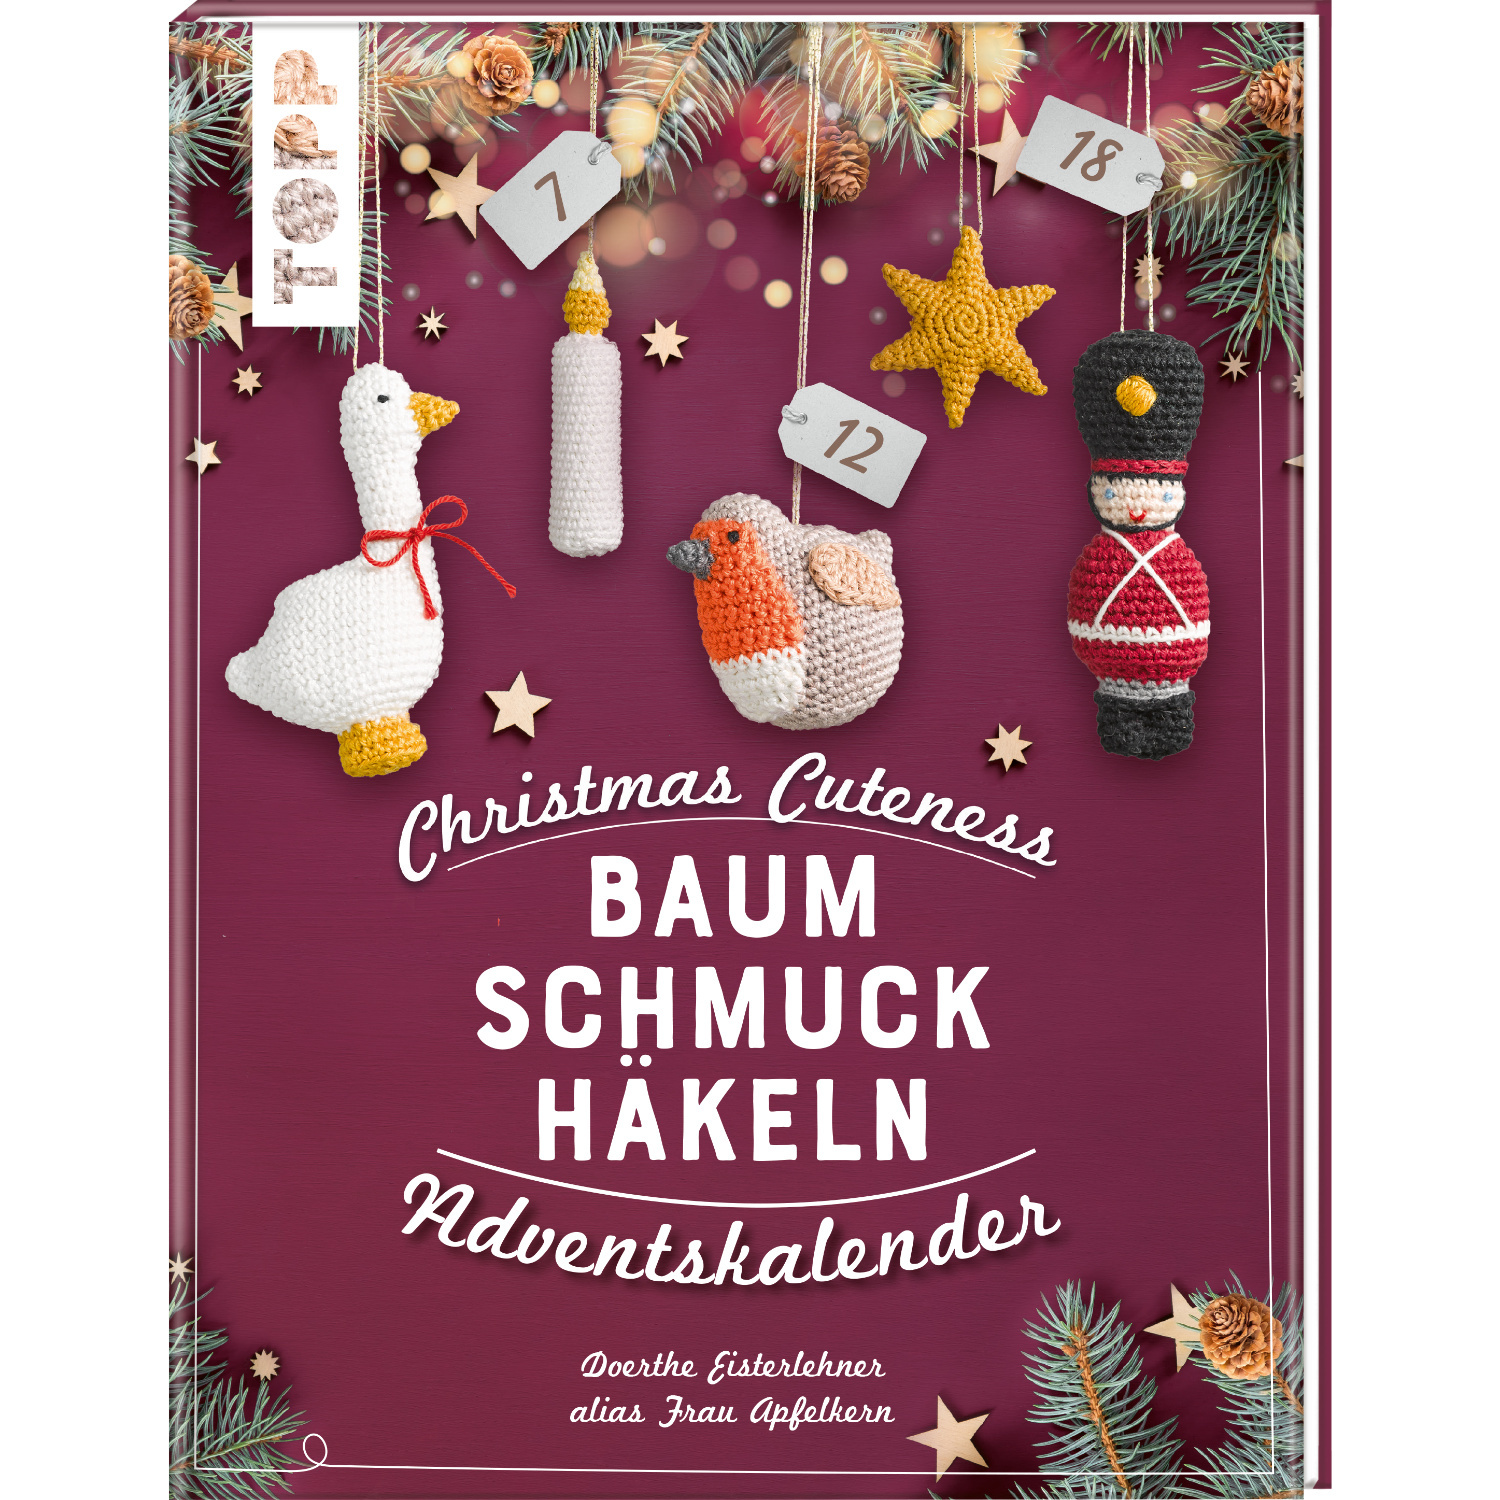 Christmas Cuteness. Baumschmuck häkeln - Adventskalender